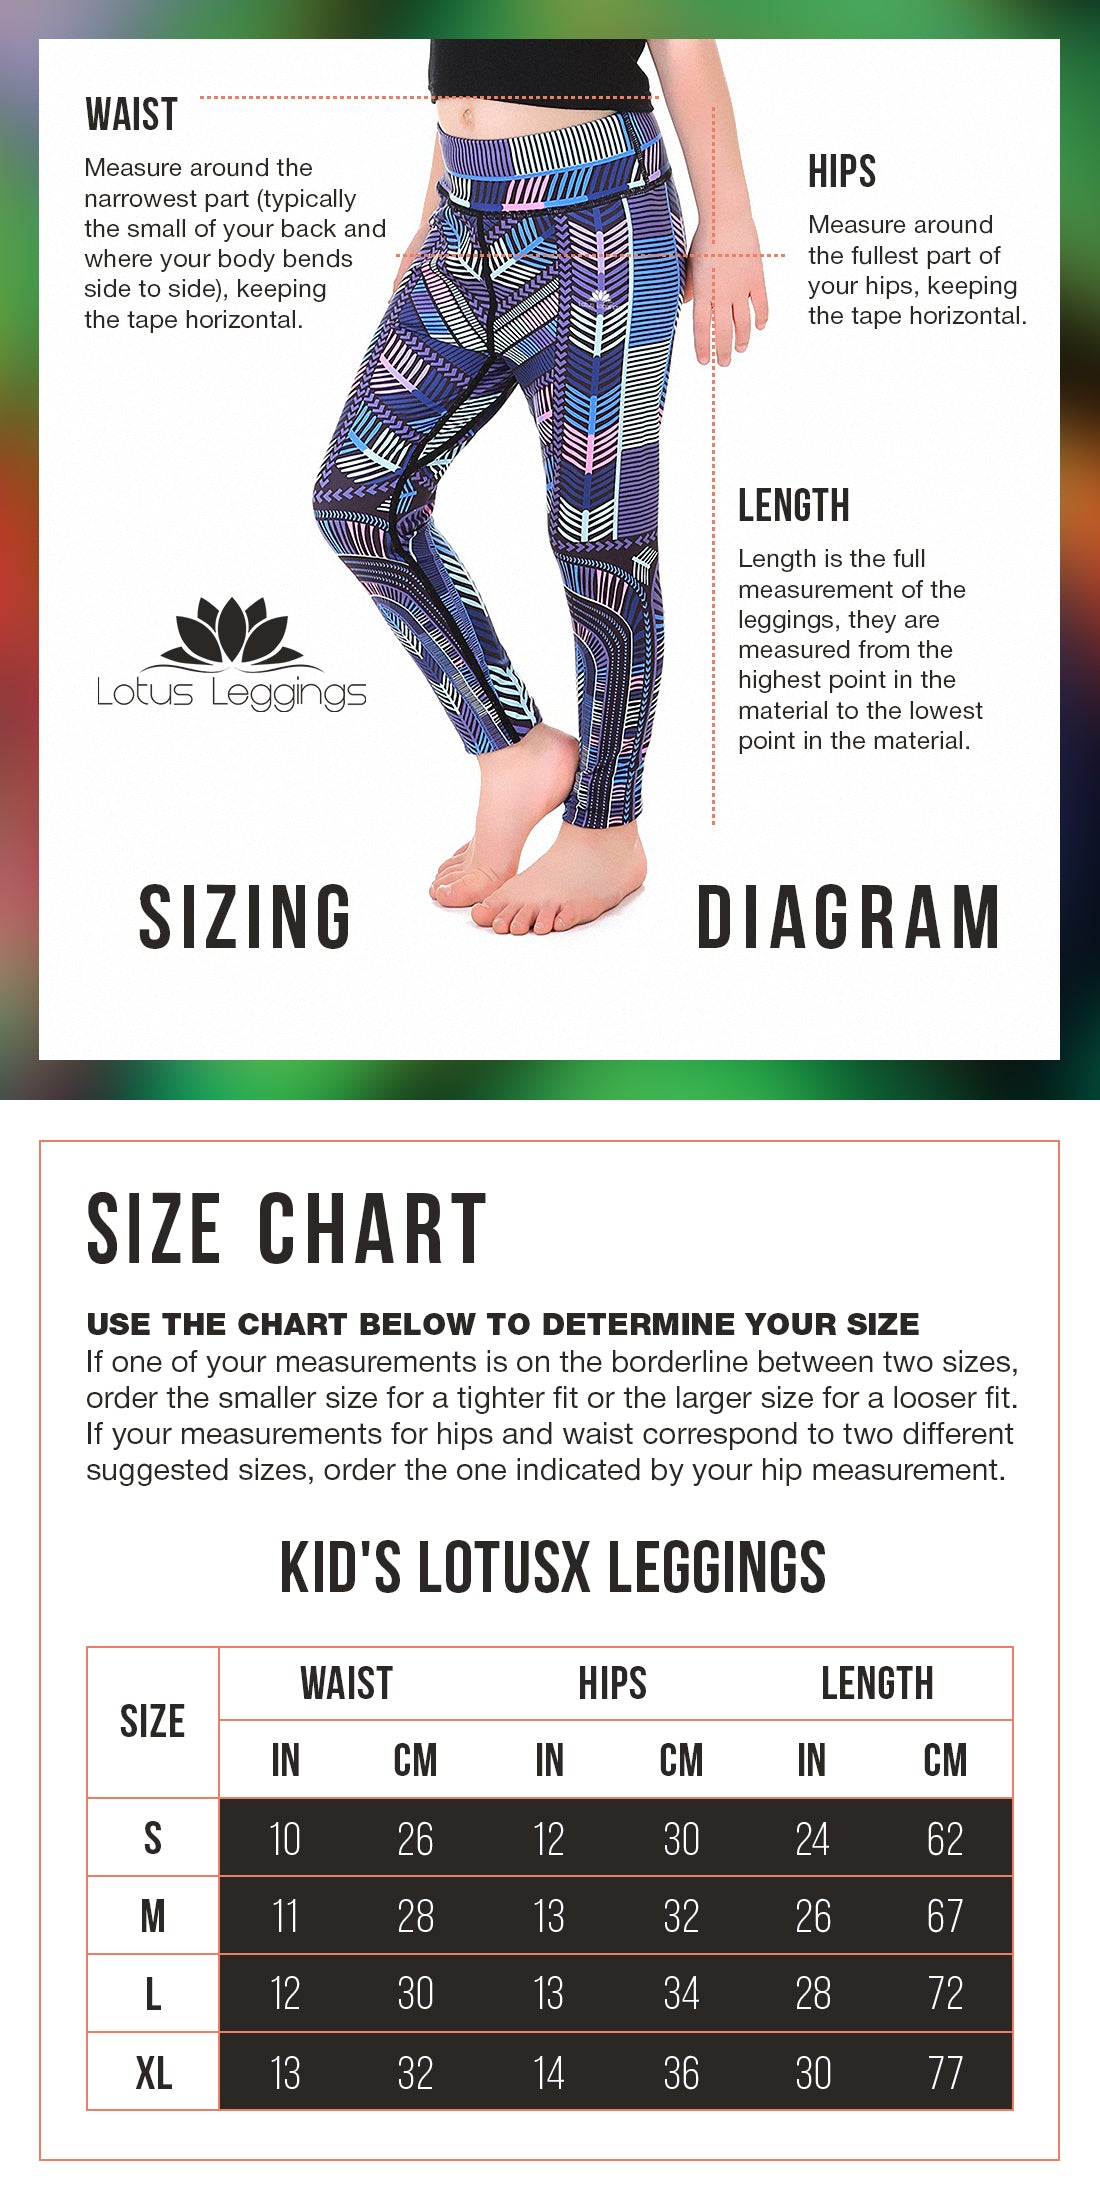 Kids LotusX Leggings Sizing Guide – Lotus Leggings